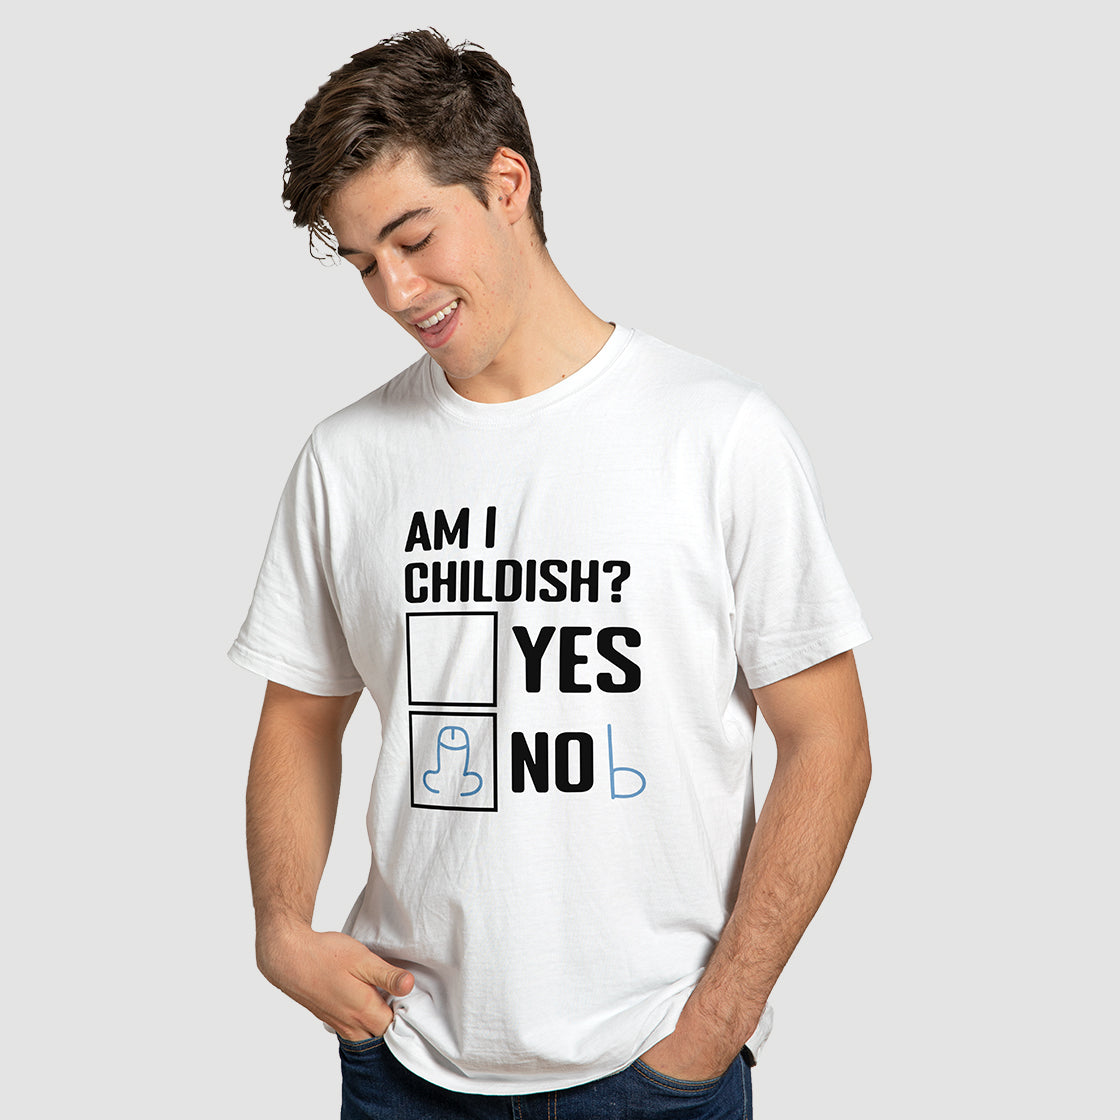 "Am I Childish?" T-Shirt - White